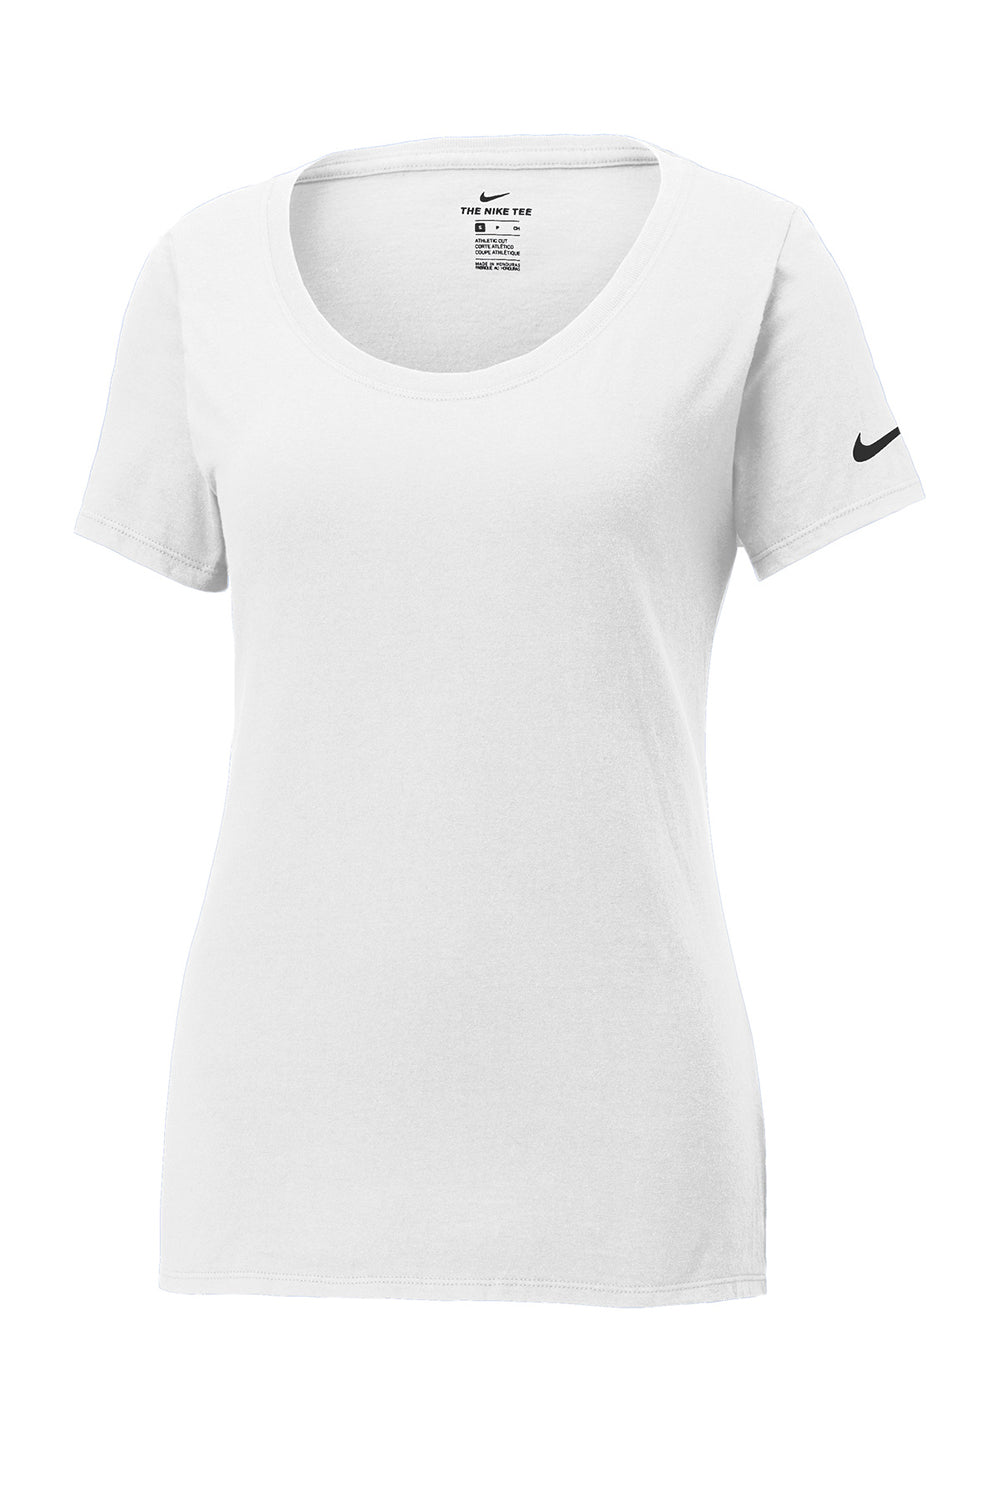 Nike NKBQ5234 Womens Dri-Fit Moisture Wicking Short Sleeve Scoop Neck T-Shirt White Flat Front